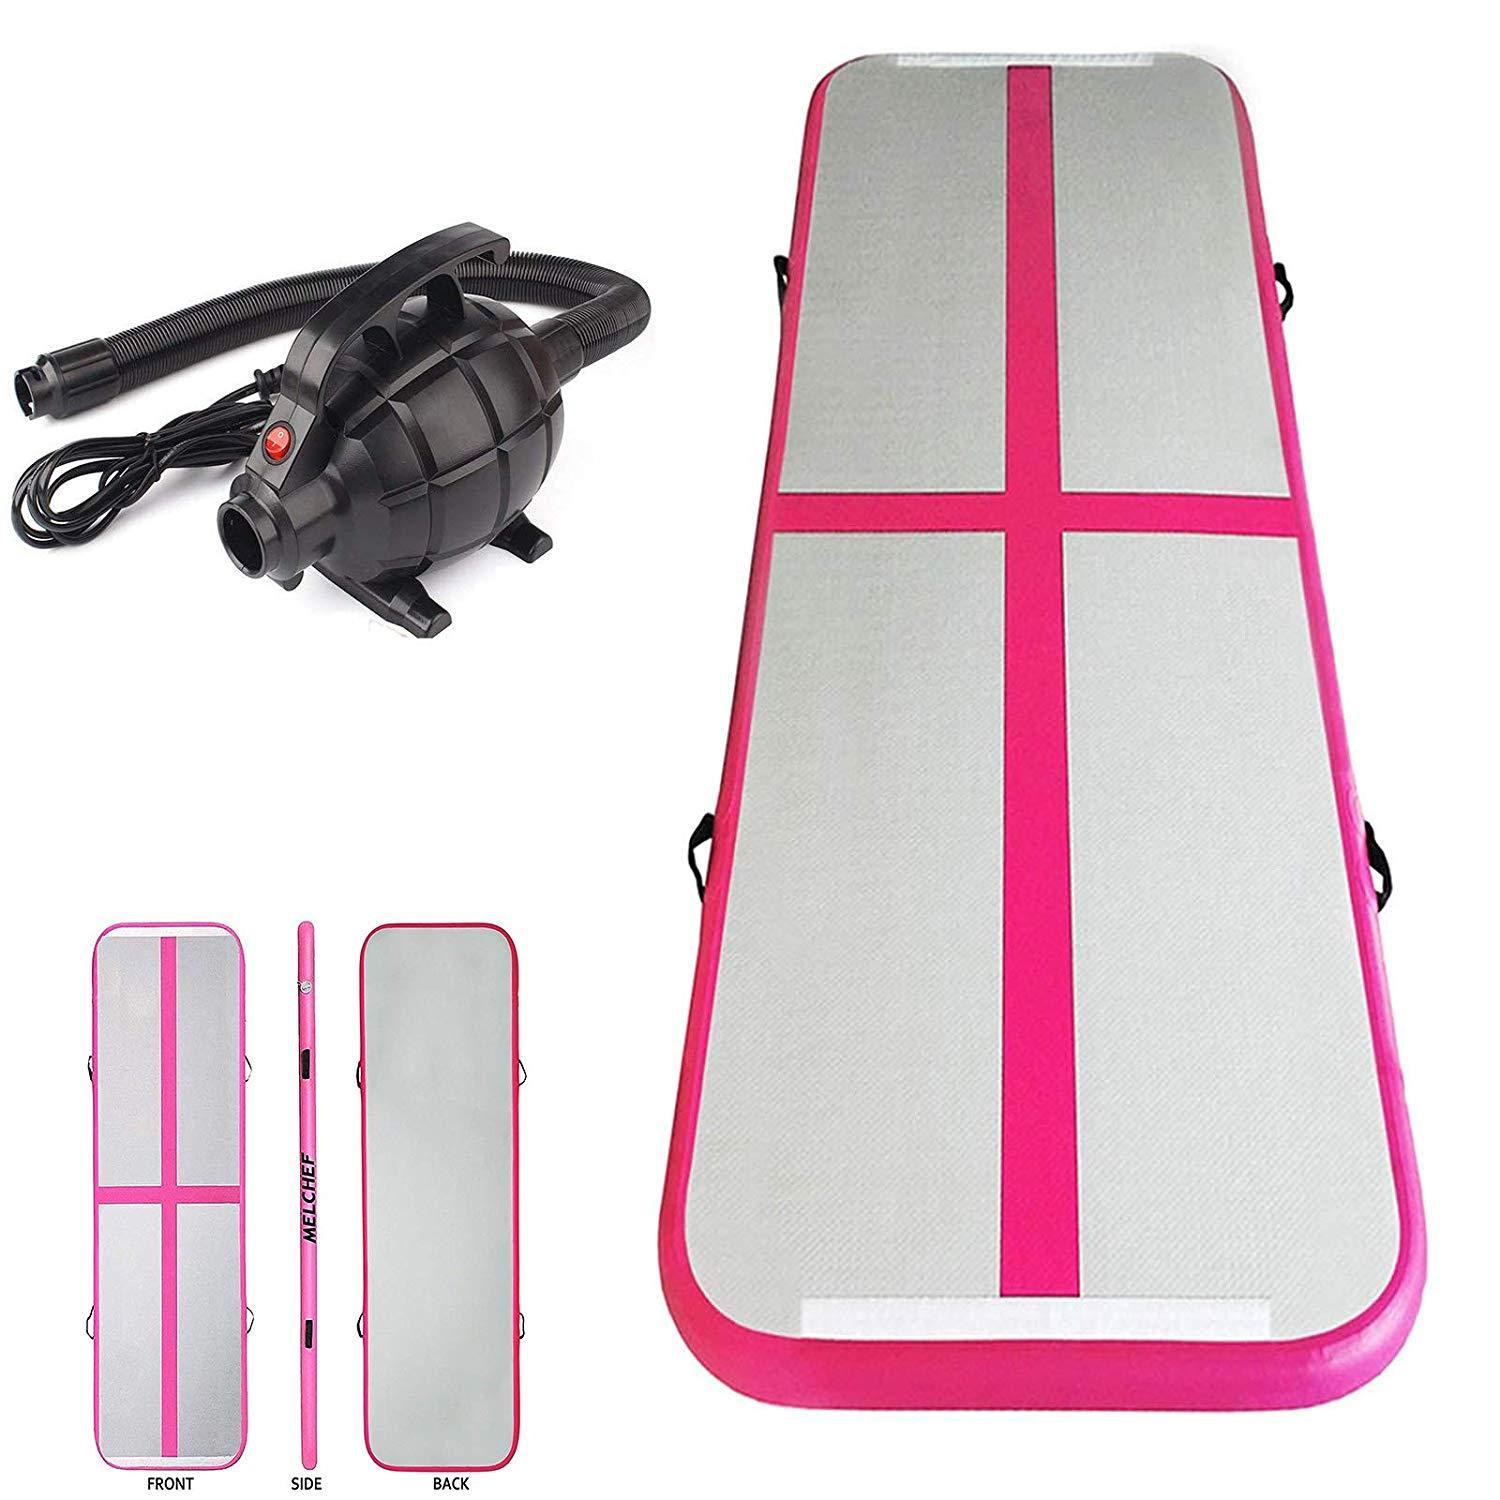 3Mx1Mx10CM Inflatable Air Track Mat Tumbling Floor Home Gymnastics Mat with Electric Pump - Pink